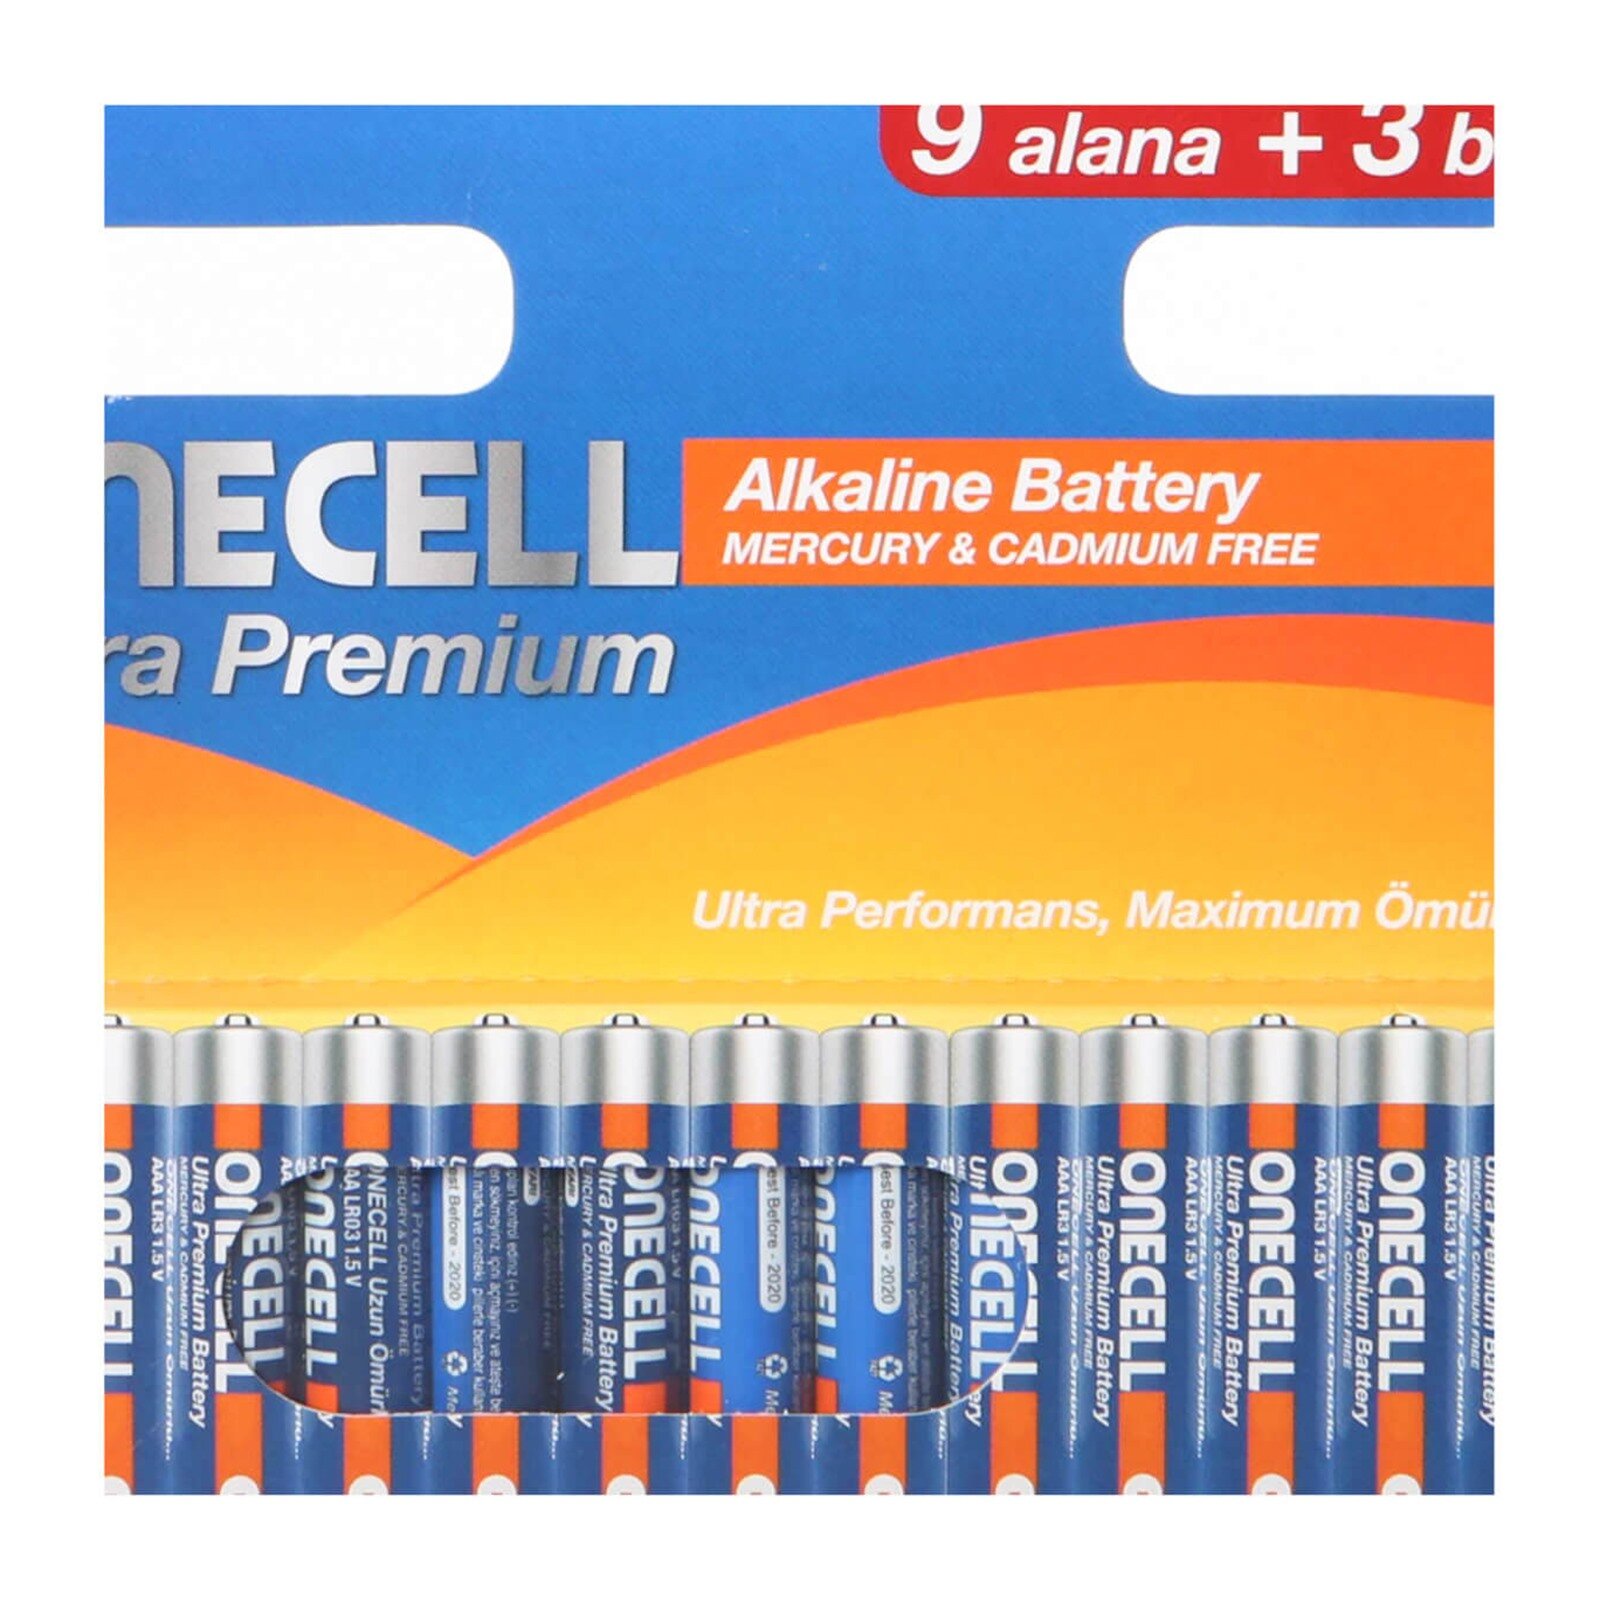 Ultra Premium Alkalin AAA Boy Pil 9+3